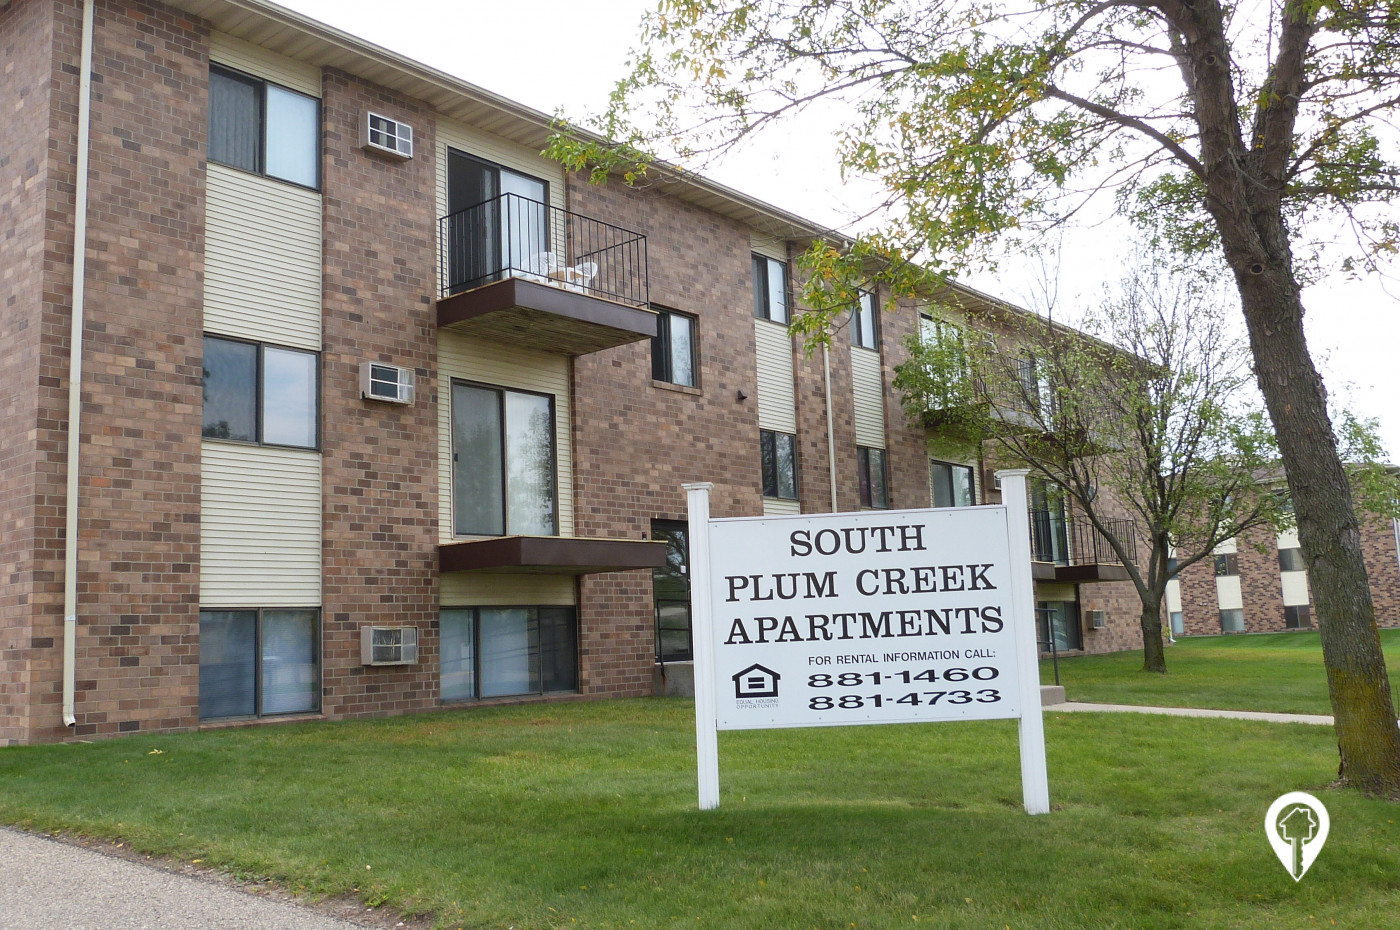 Plum Creek/South Plum Creek Apts, LLC - South Plum Creek Apartments